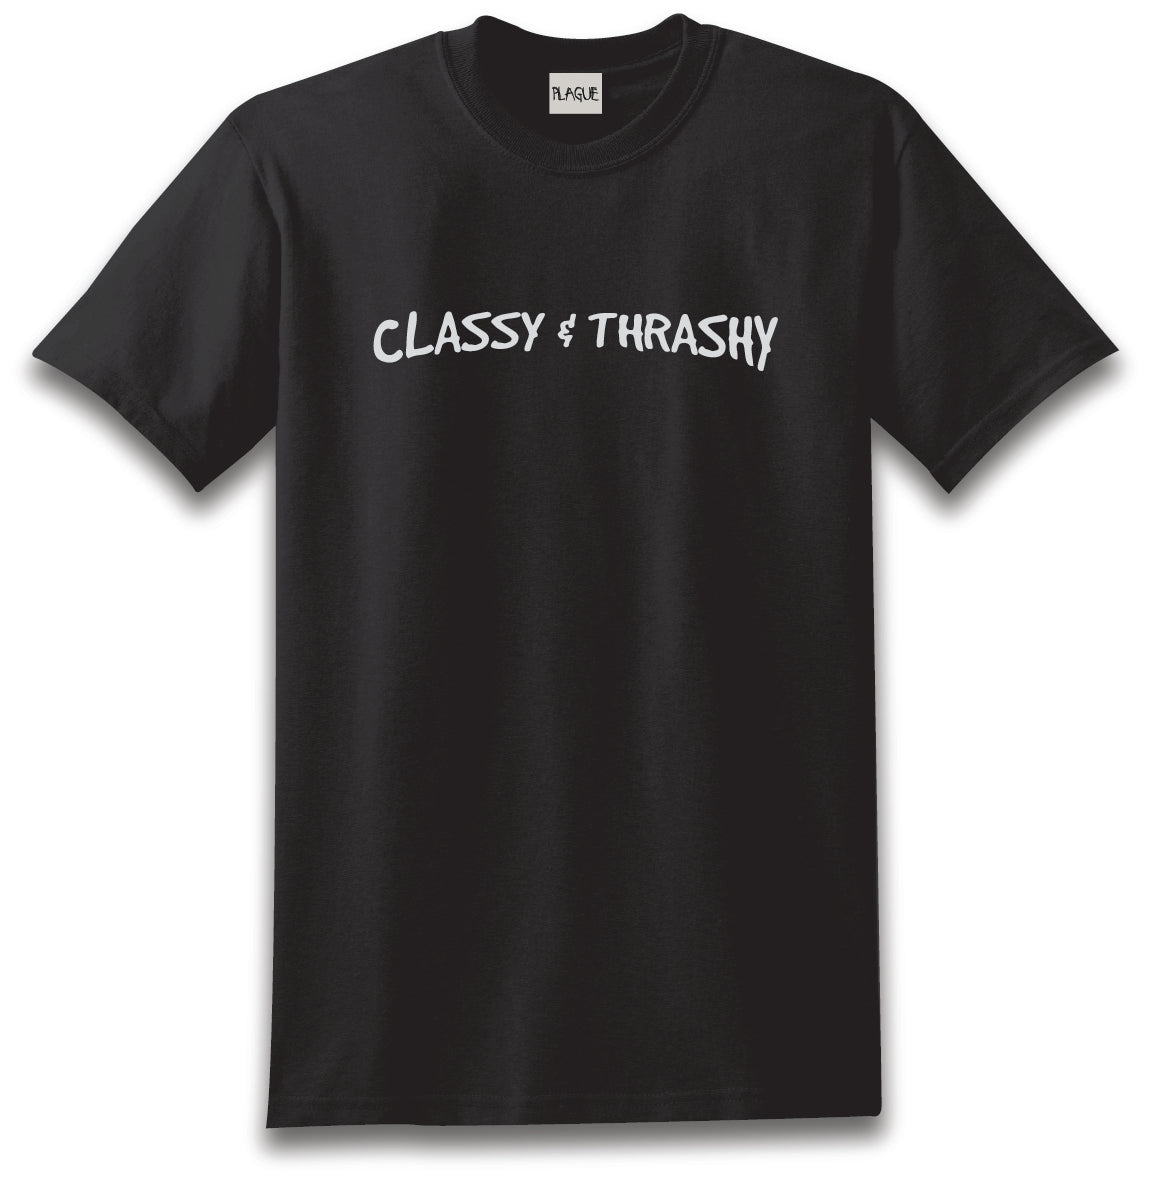 Classy & Thrashy